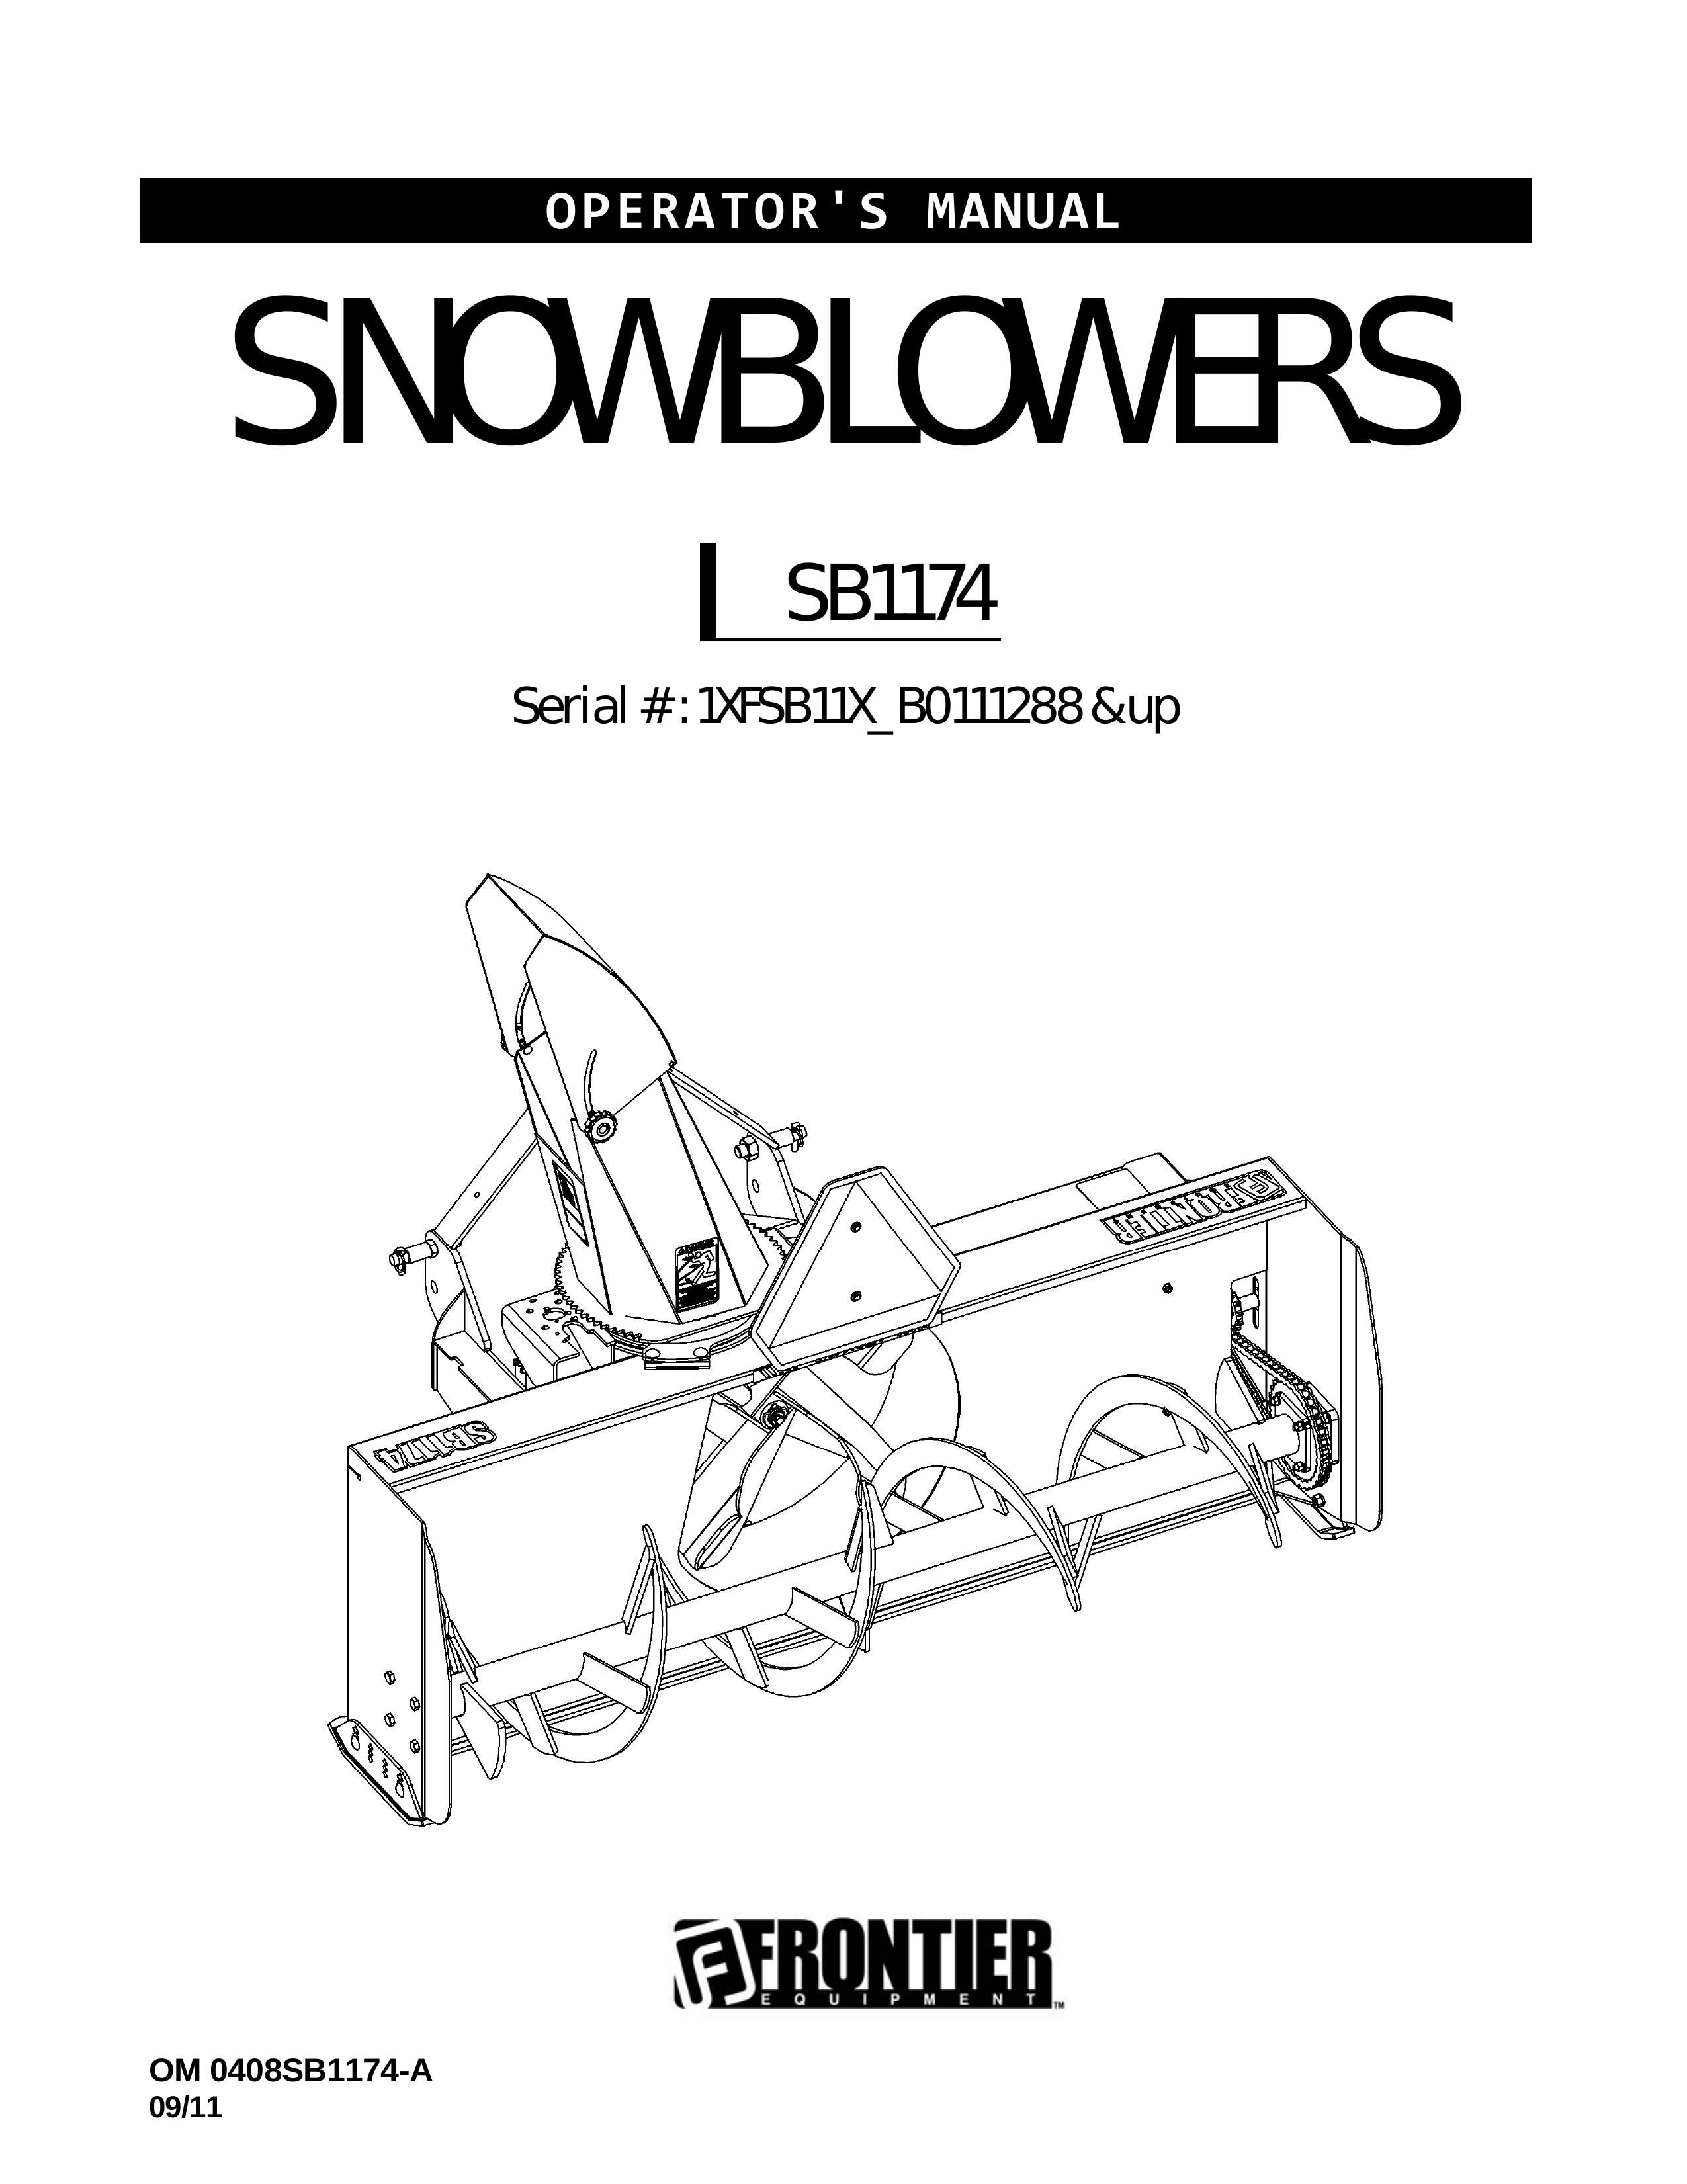 John Deere SB1174 Snow Blower User Manual